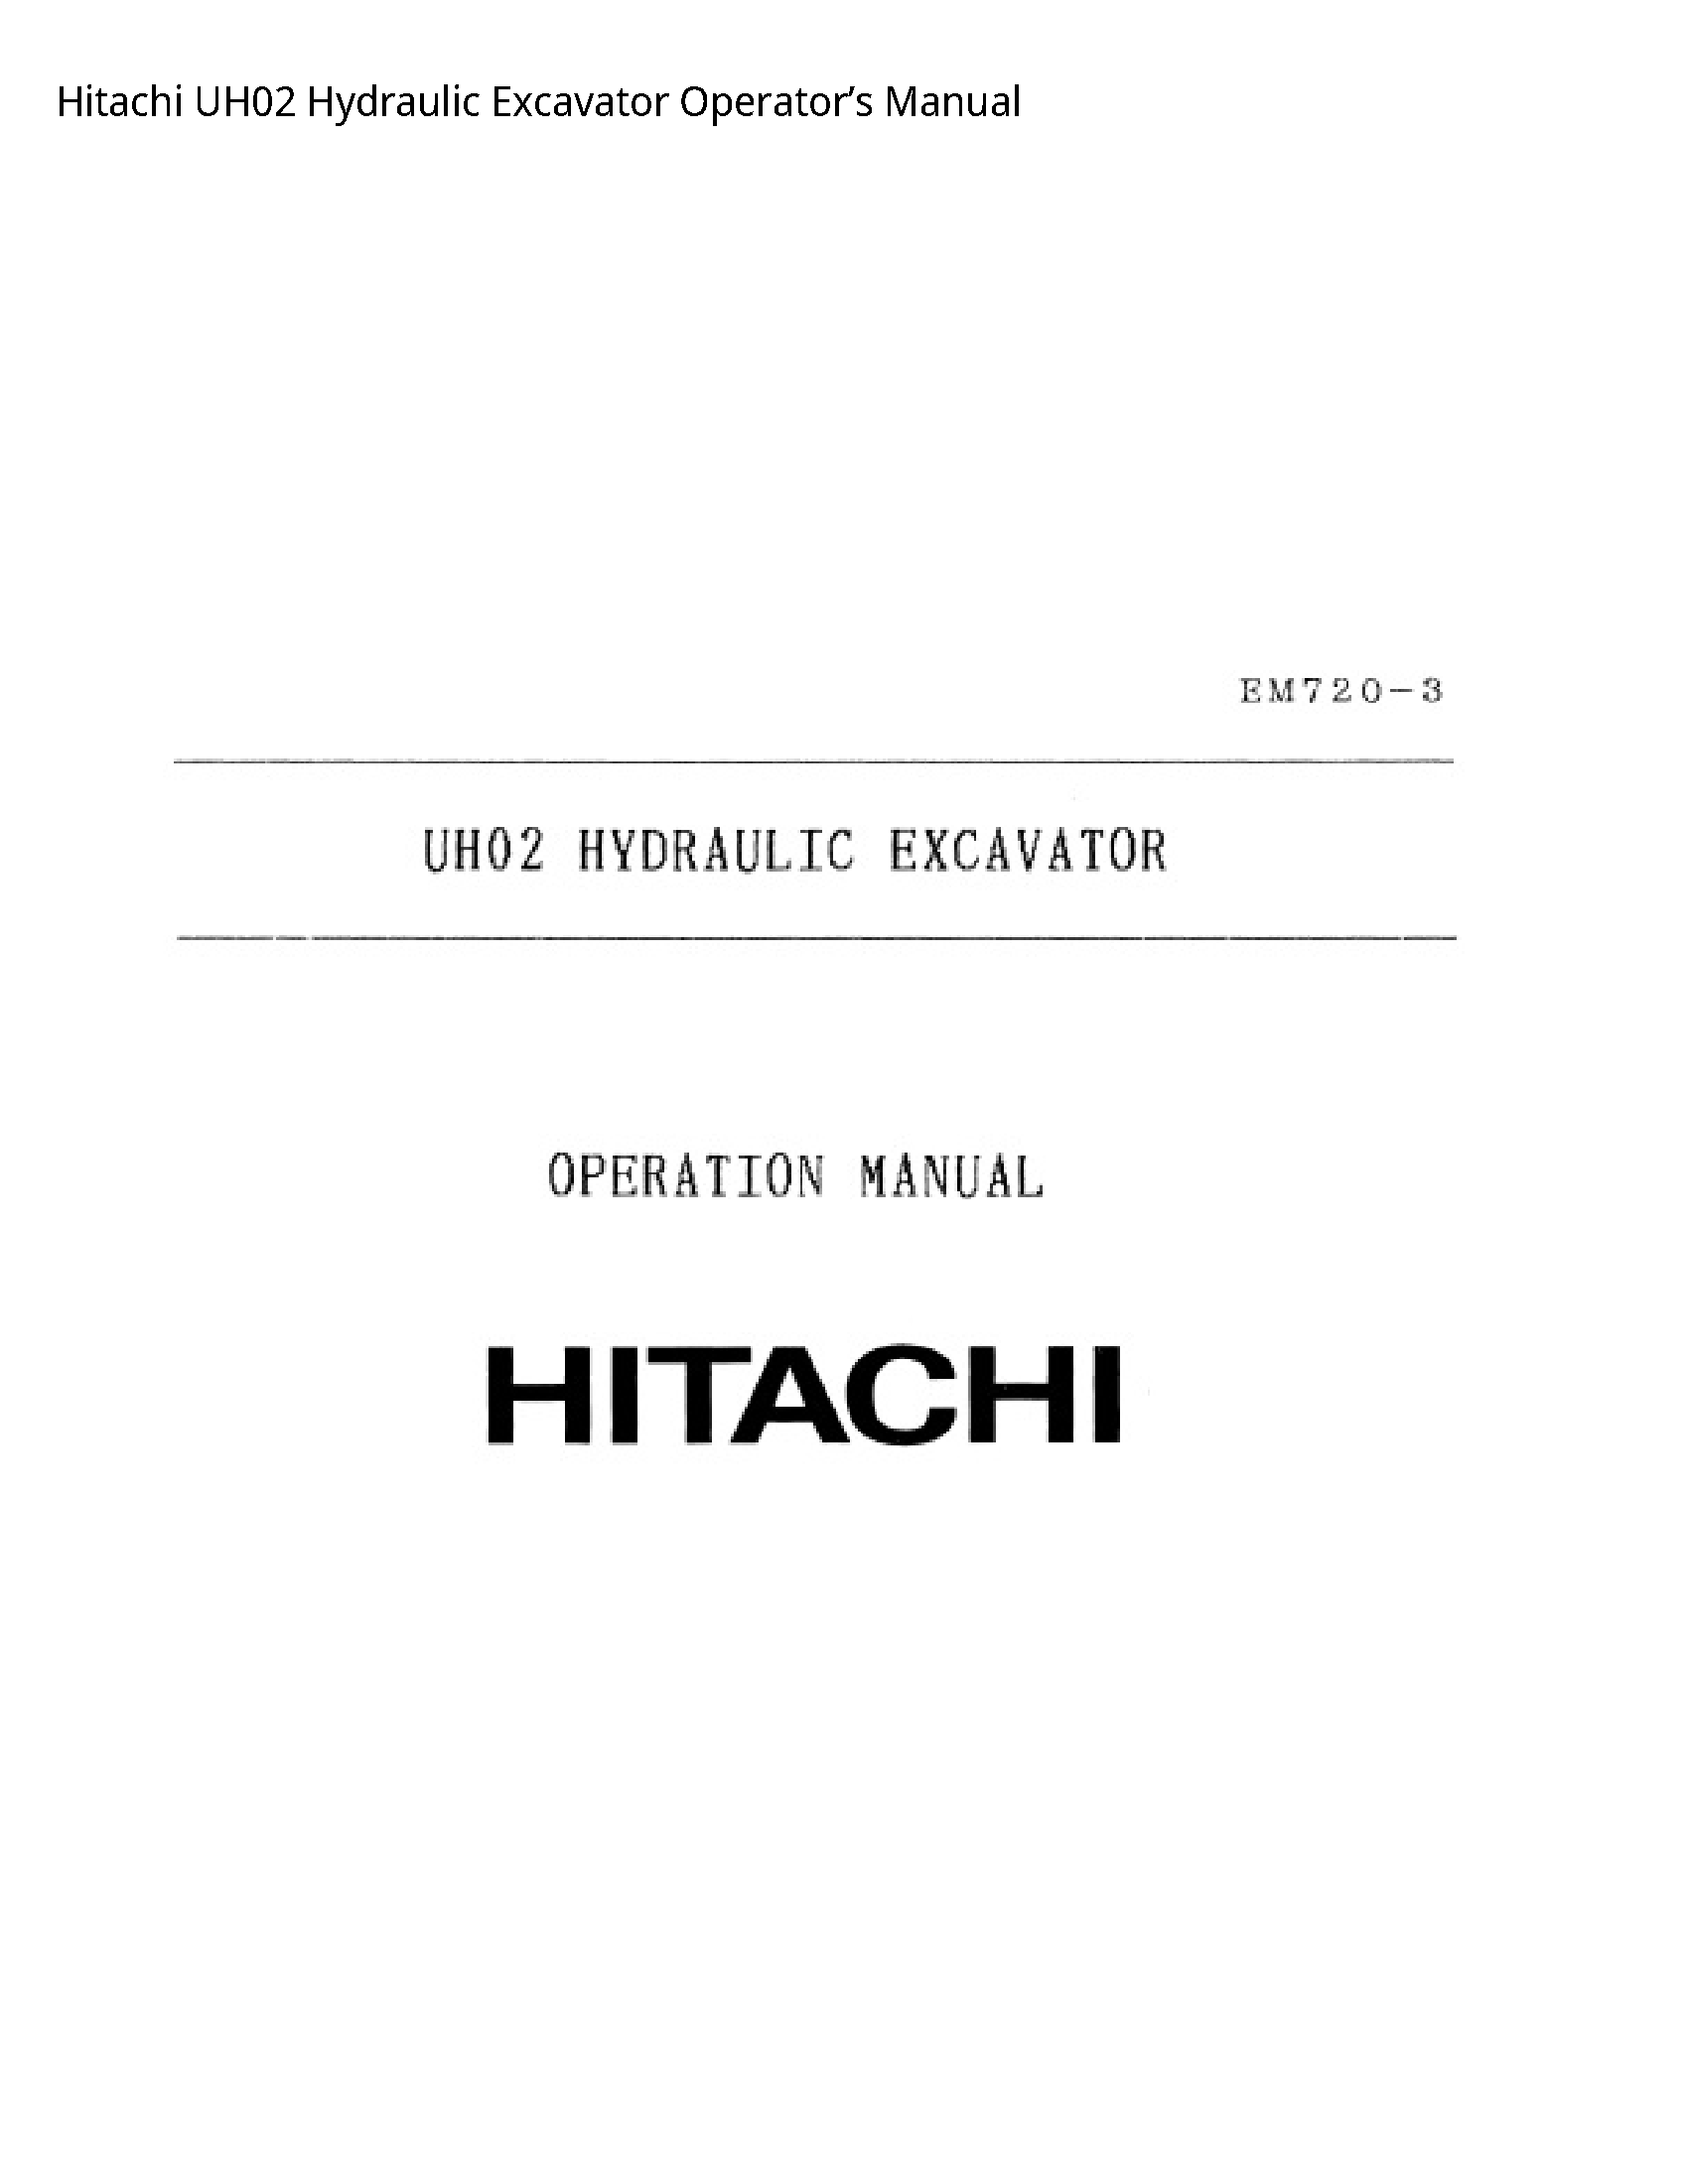 Hitachi UH02 Hydraulic Excavator Operator’s manual